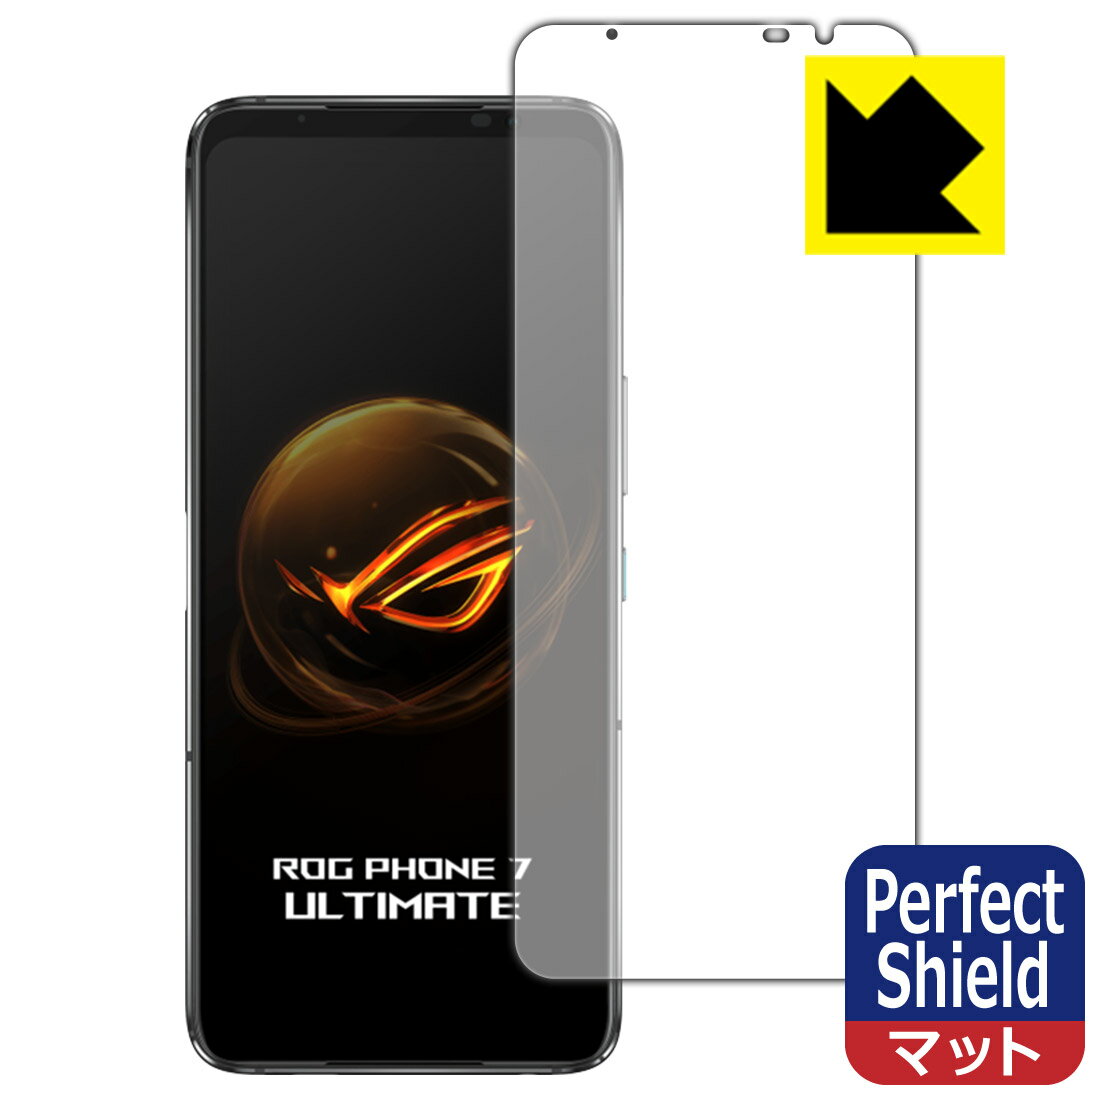 Perfect Shield【反射低減】保護フィルム ASUS ROG Phone 7 / ROG Phone 7 Ultimate 画面用 【指紋認証対応】 日本製 自社製造直販